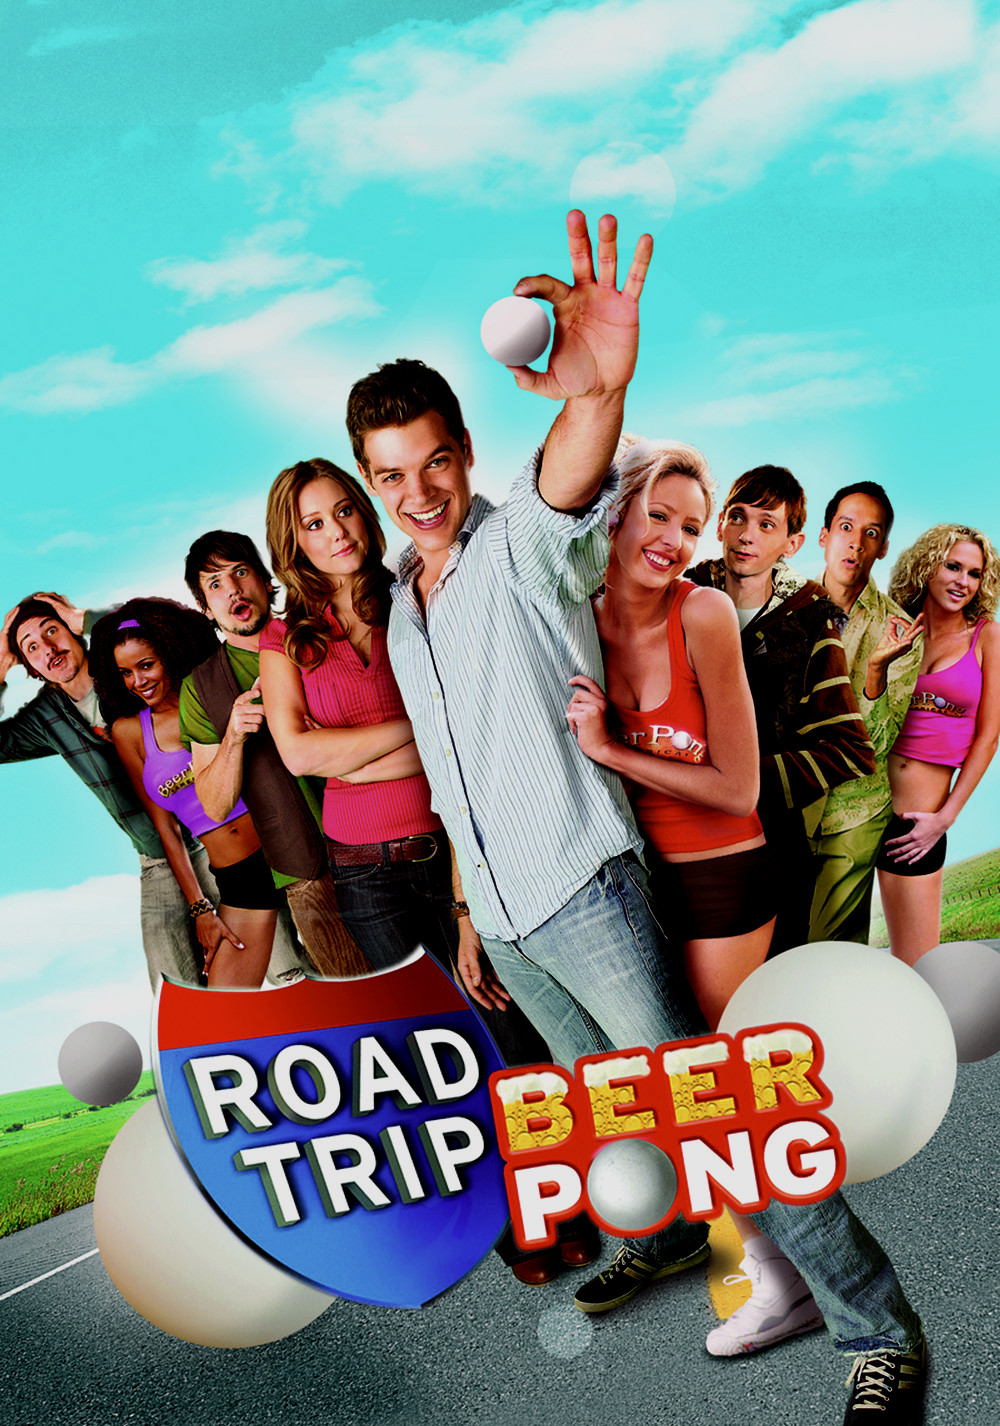 road trip beer pong wiki